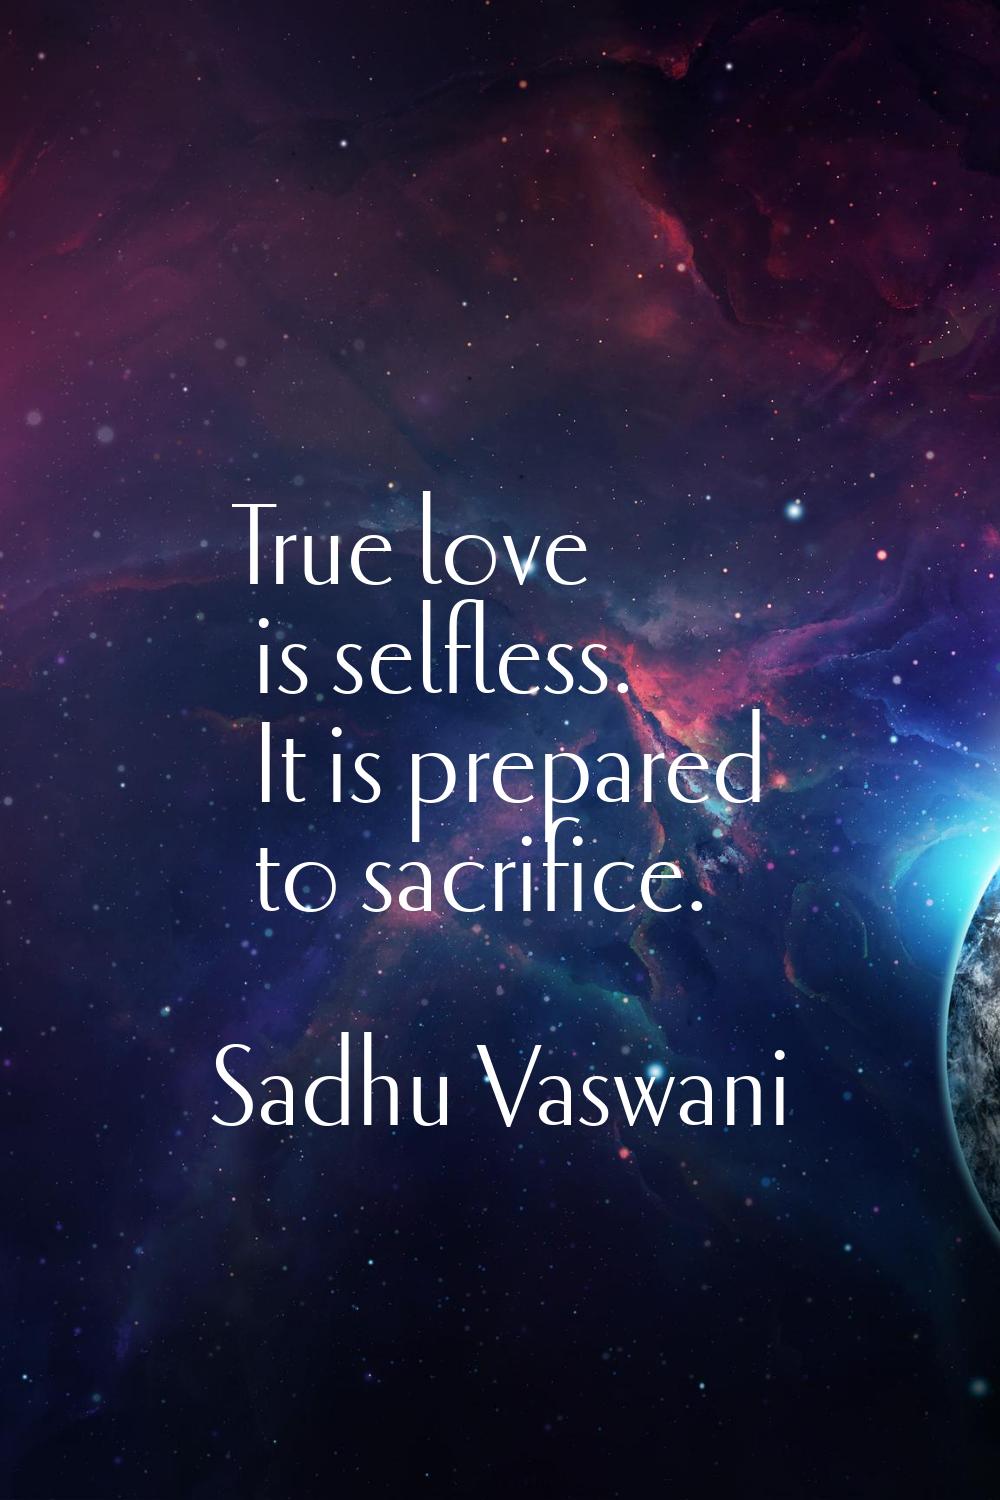 True love is selfless. It is prepared to sacrifice.